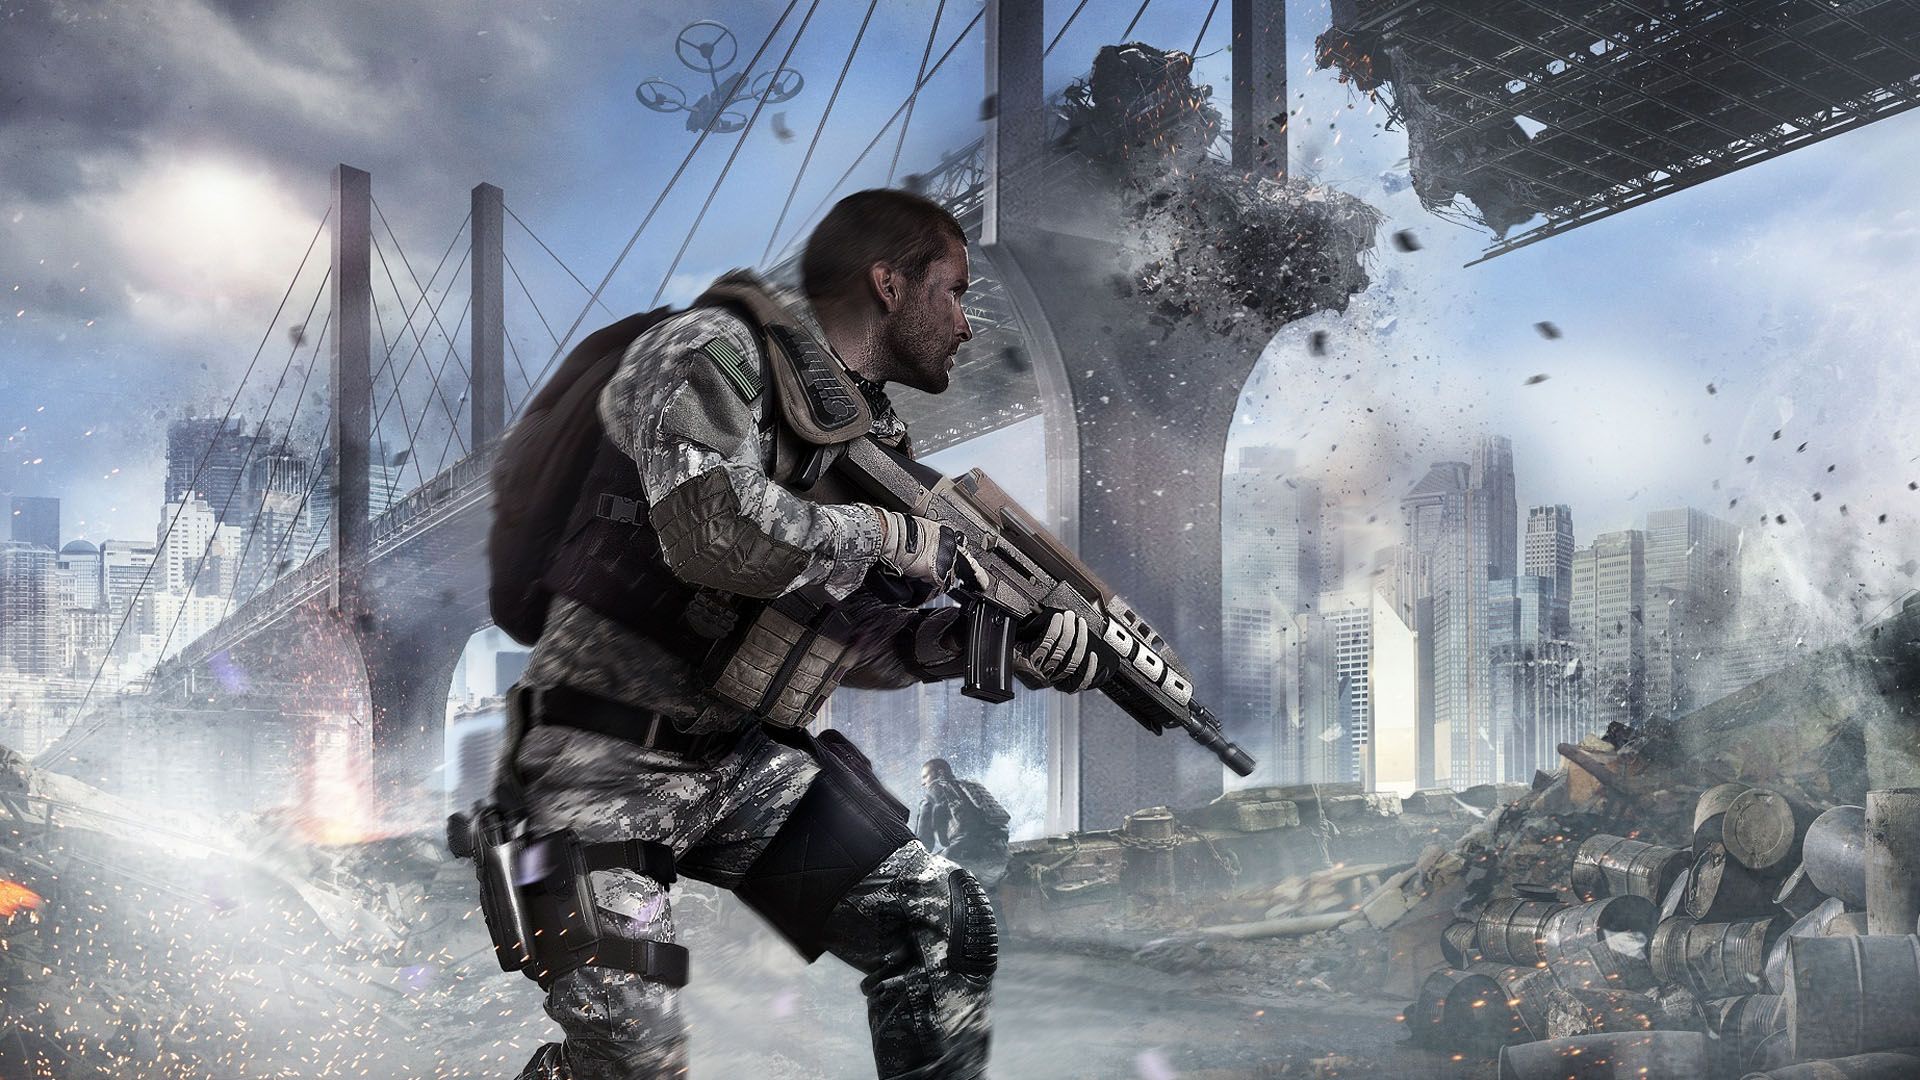 Call Of Duty Black Ops 2 Vengeance dd wallpaper 1920x1080 163068